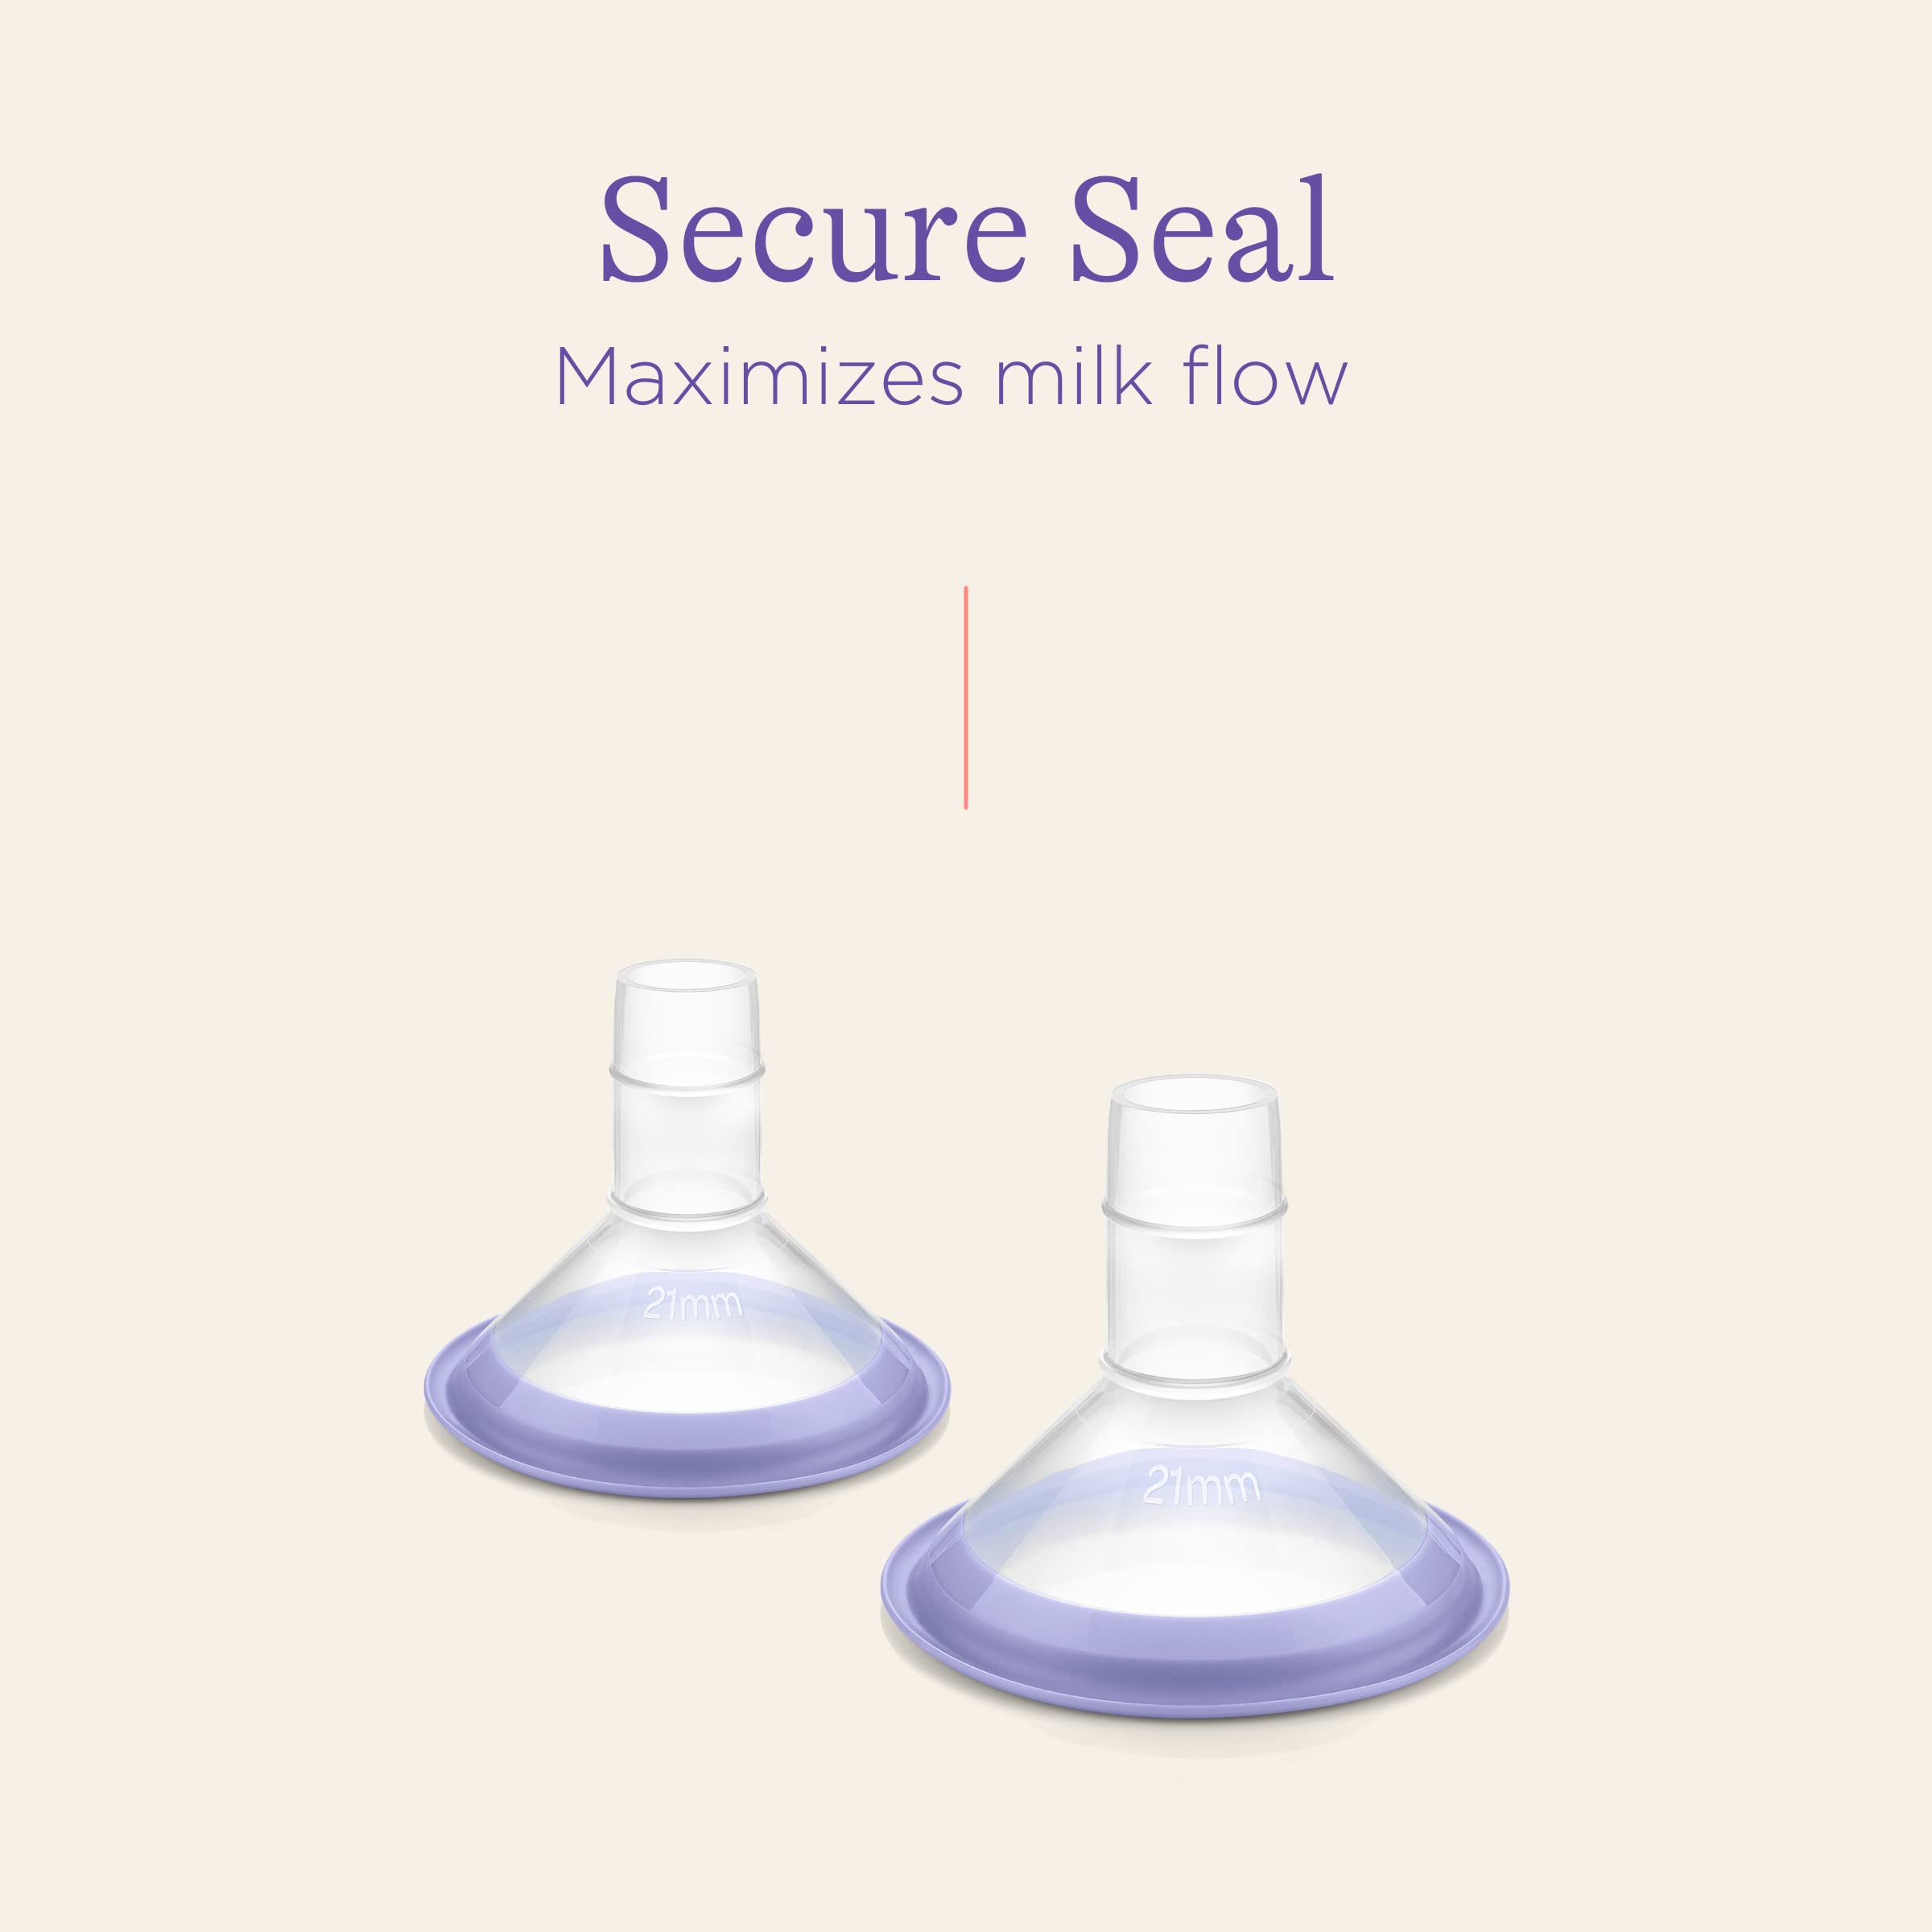 Lansinoh ComfortFit Breast Pump Flanges, Size 21mm, 2 Count